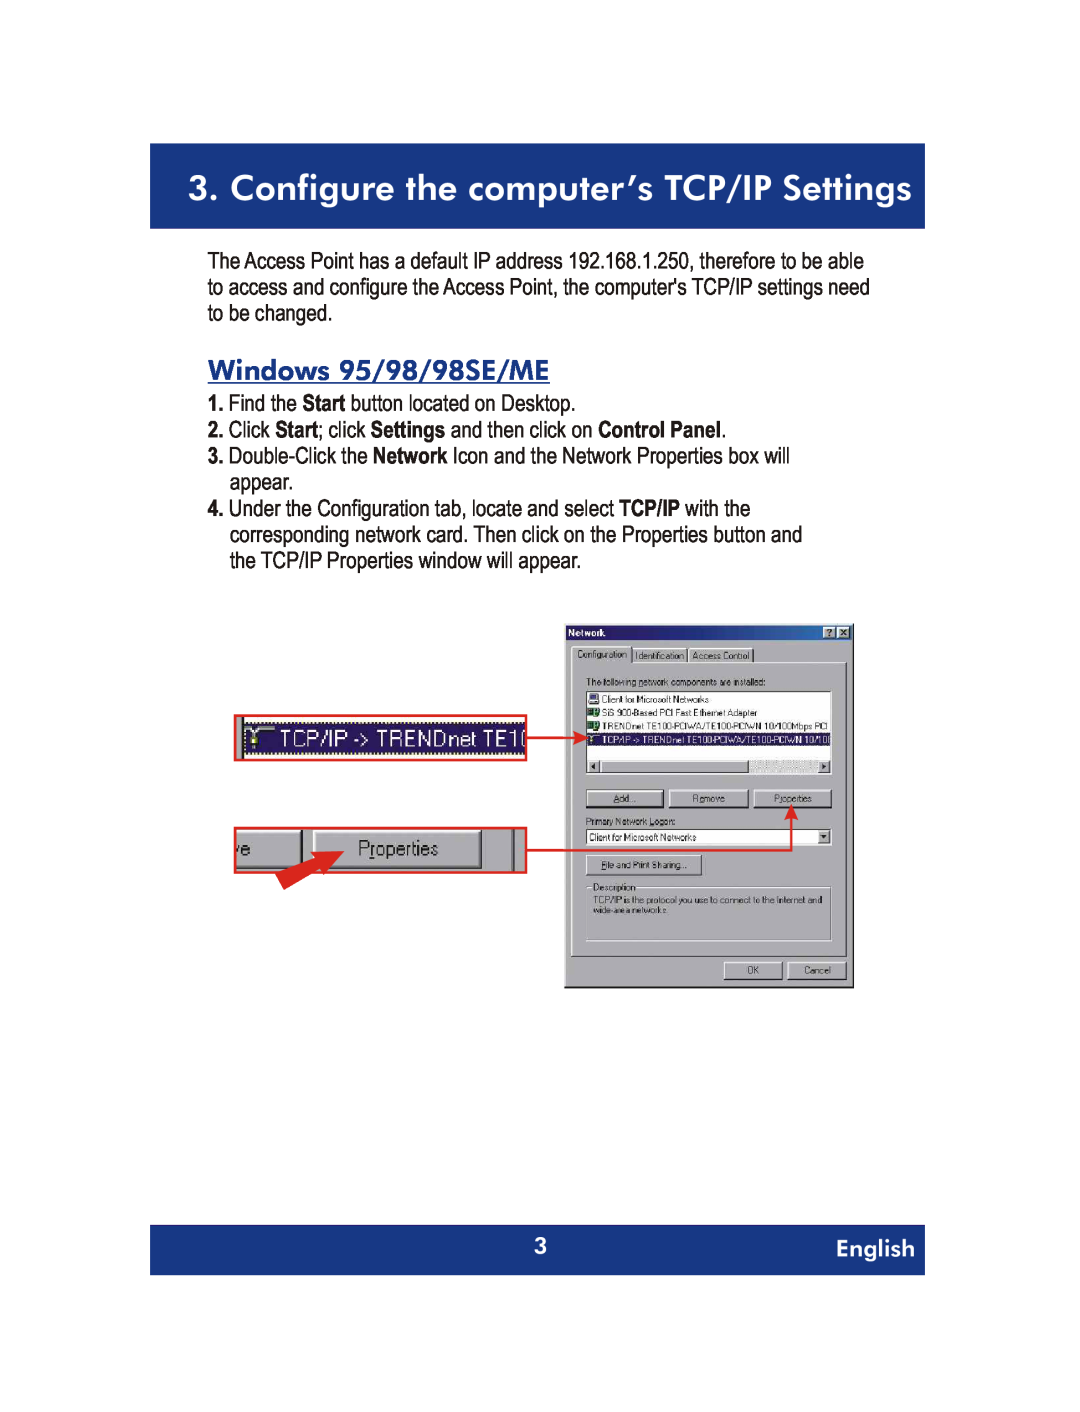 TRENDnet 54Mpbs 802.11g Wireless Access Point + Bridge Configure the computer’s TCP/IP Settings, Windows 95/98/98SE/ME 